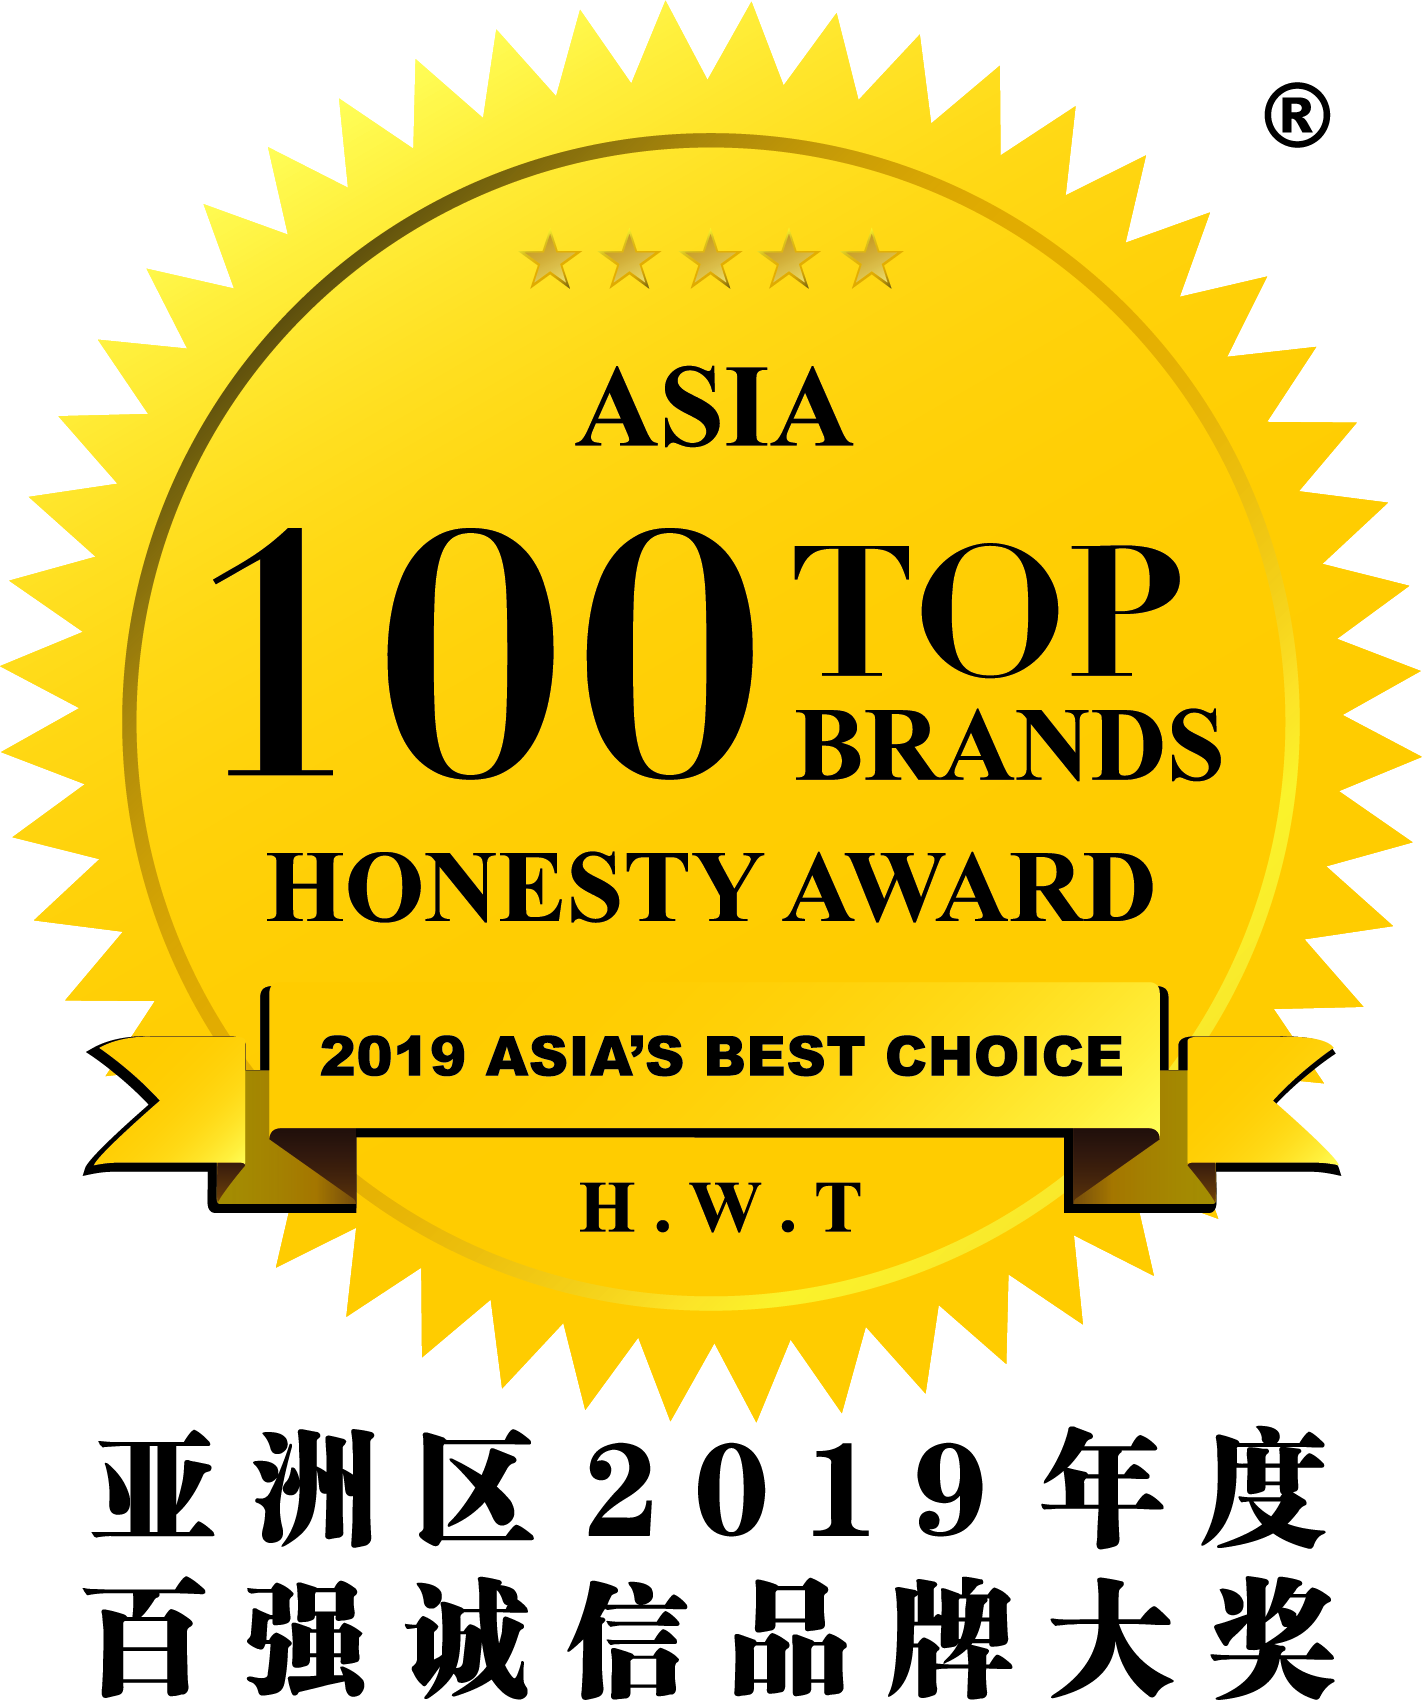 Asia 100 Top Brands Honesty Award